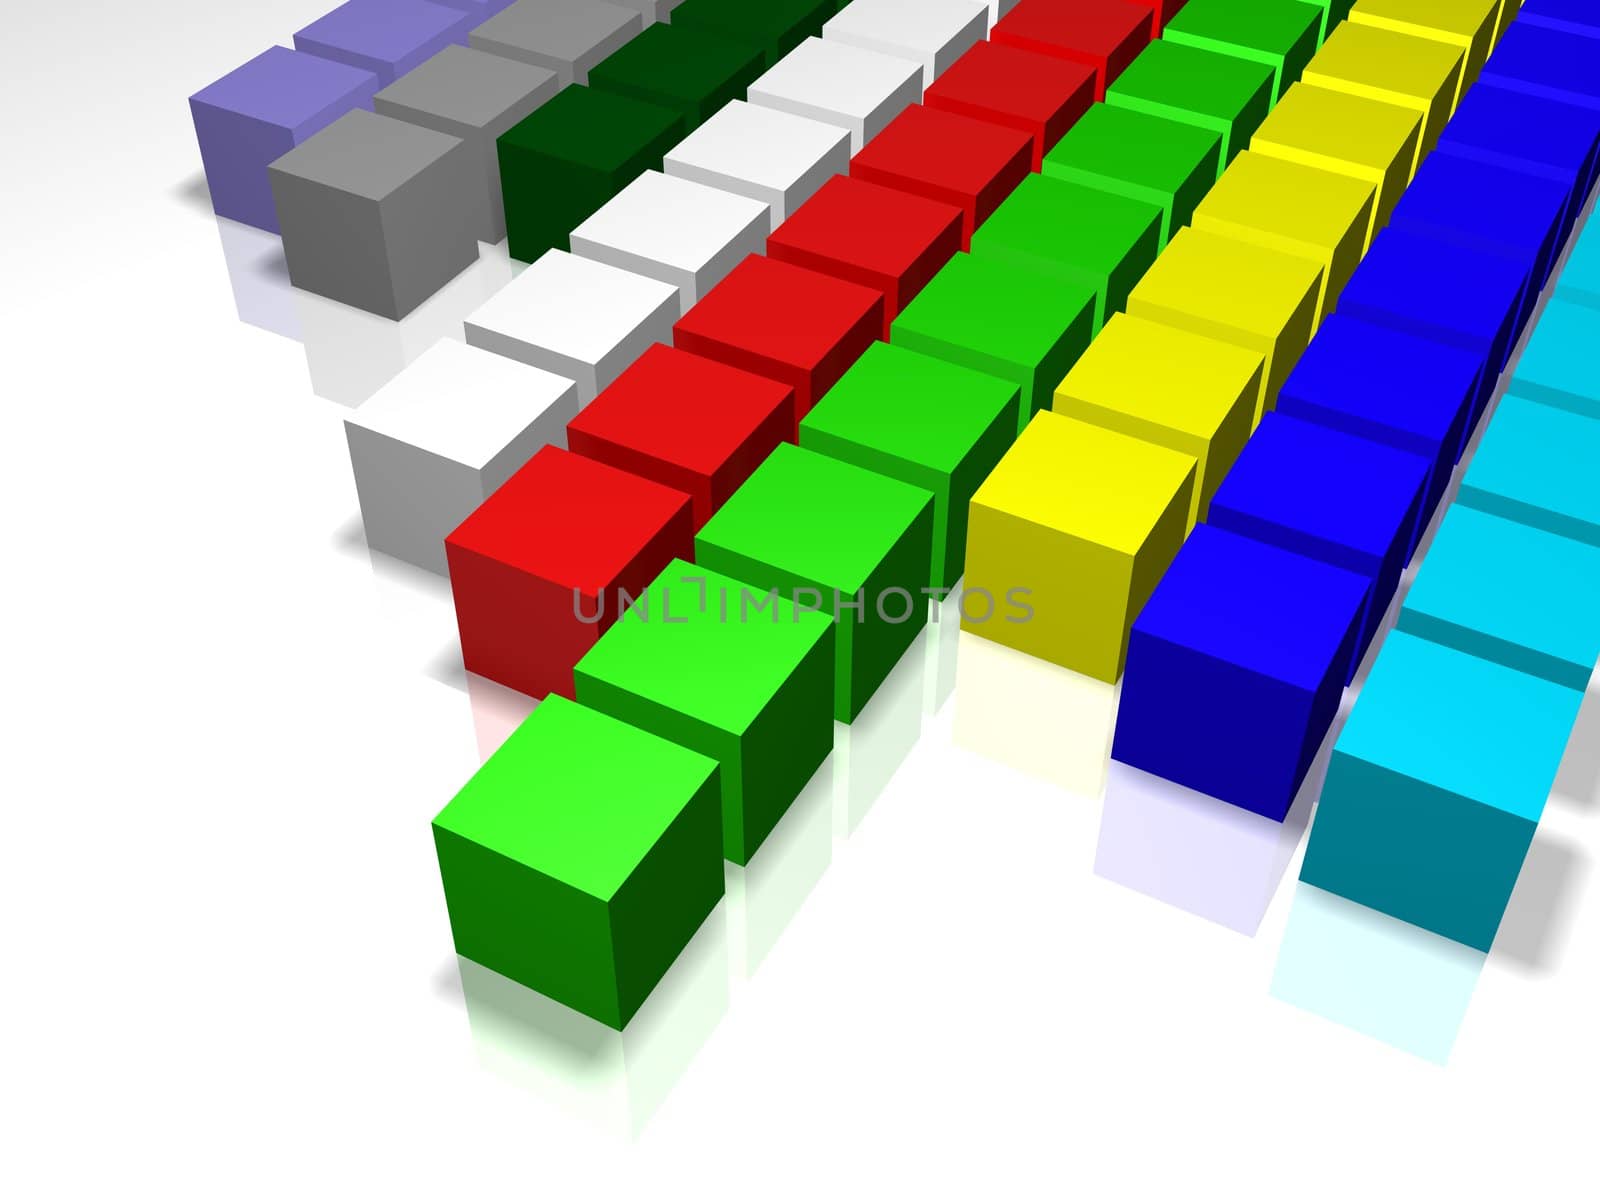 3D colour linear graph with various long